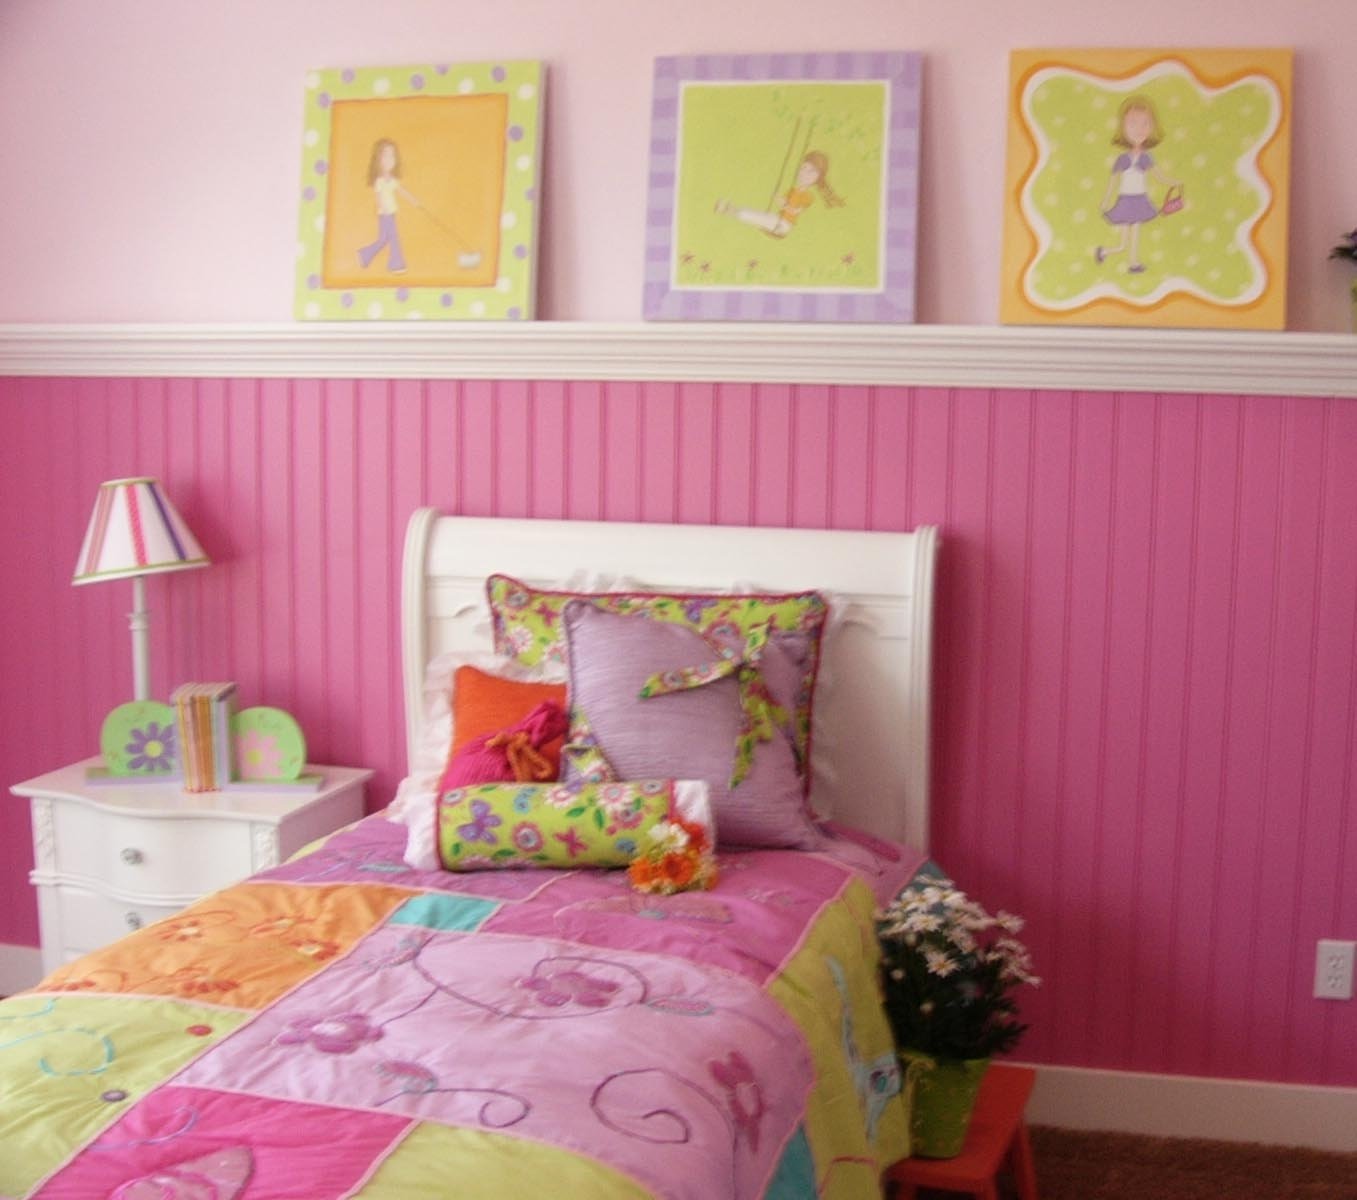 10 Wonderful Little Girls Room Decorating Ideas pictures of girls rooms decorating ideas ideas for little girl 2022